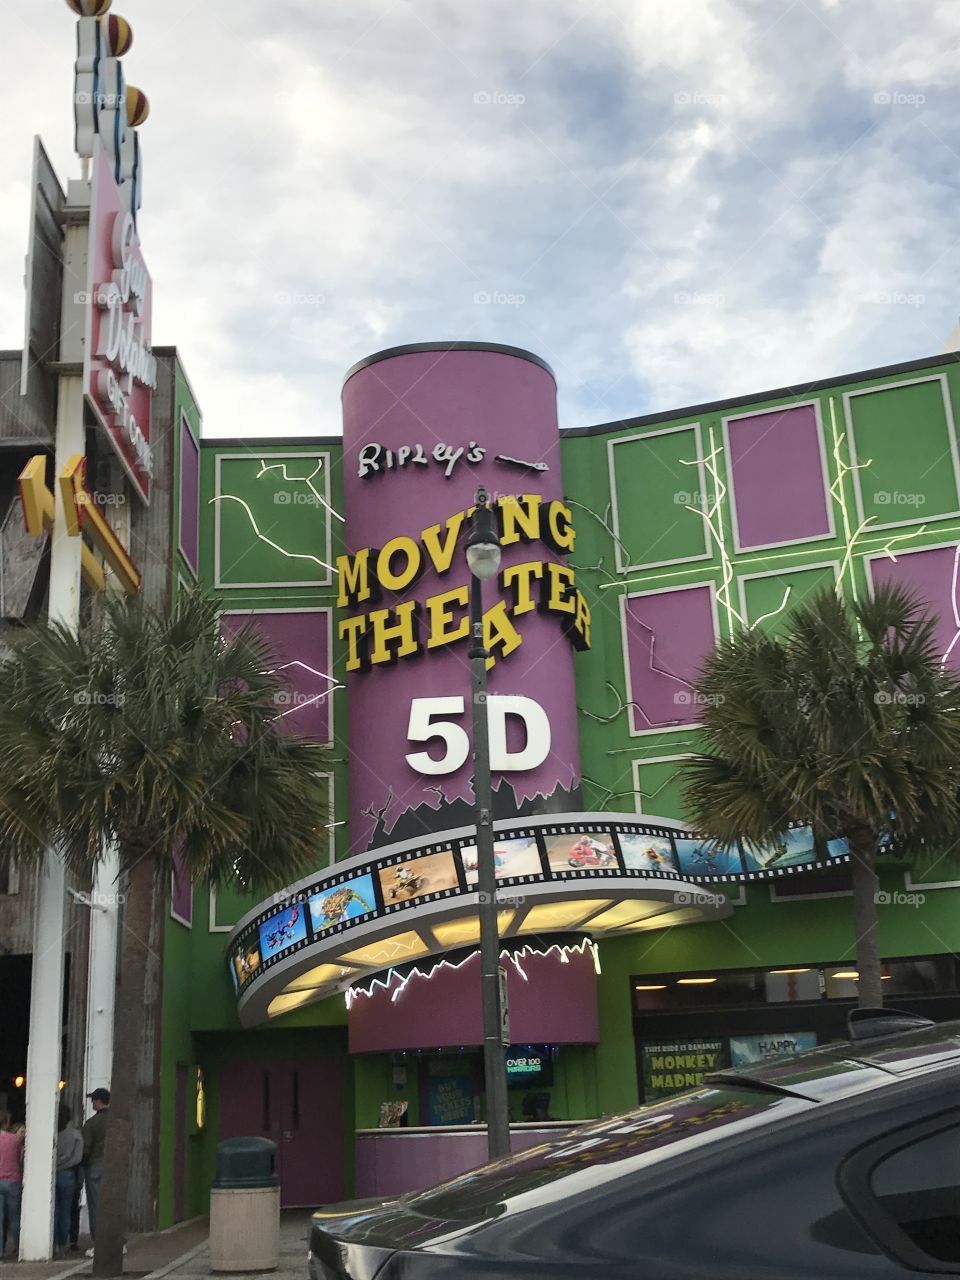 Ripleys 5D Movie Theater